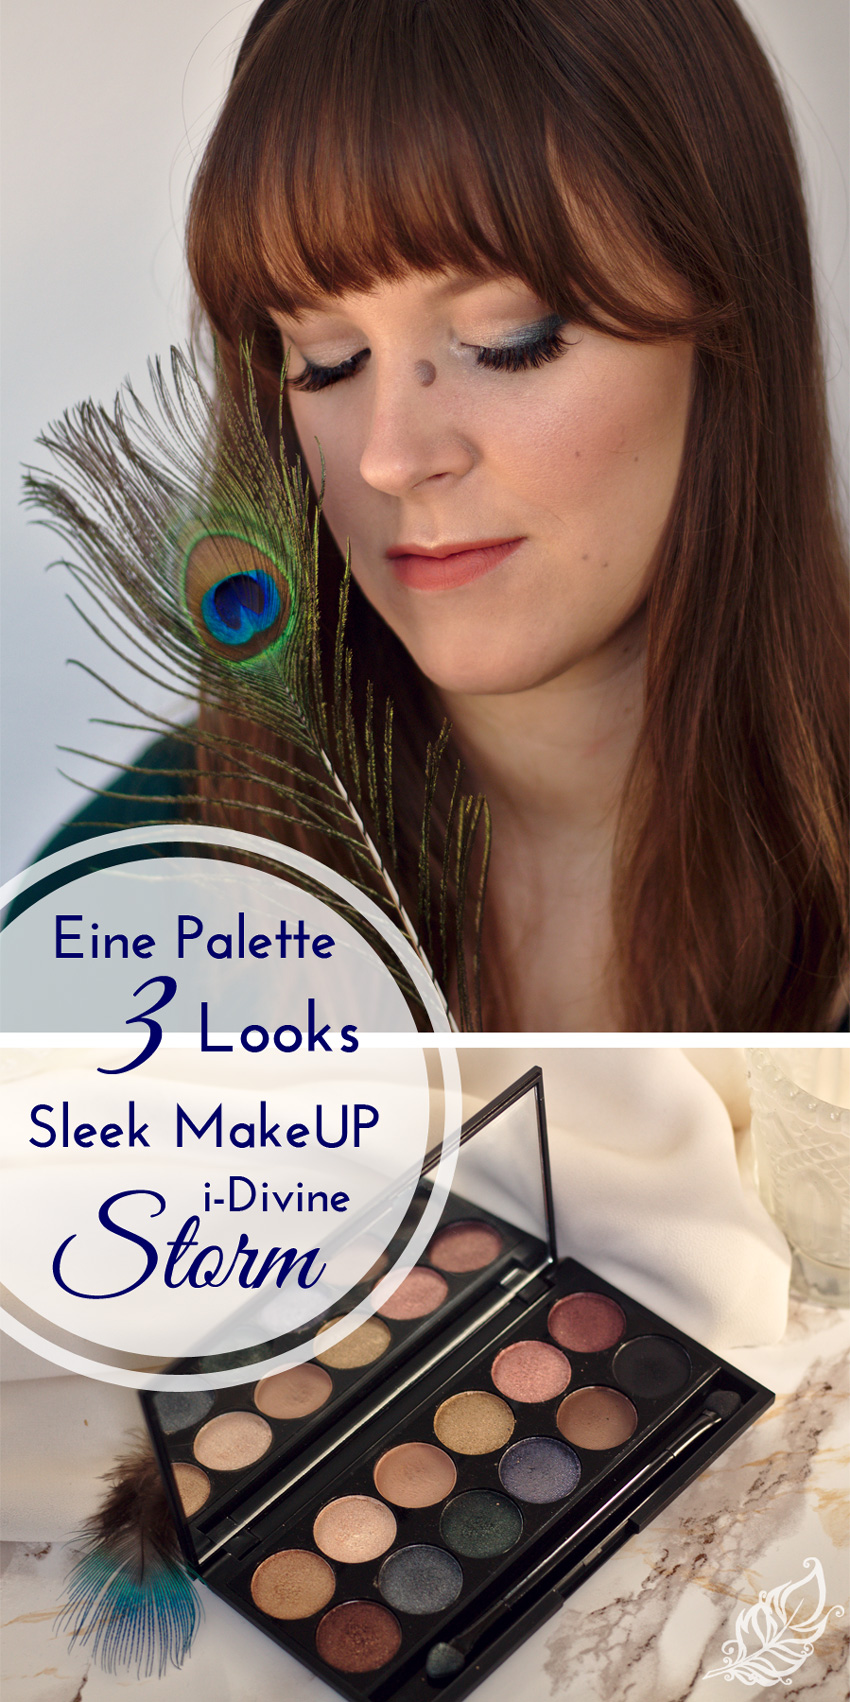 All the wonderful things: Eine Palette 3 Looks - Sleek MakeUP i-Divine Strom Lidschatten Palette Review